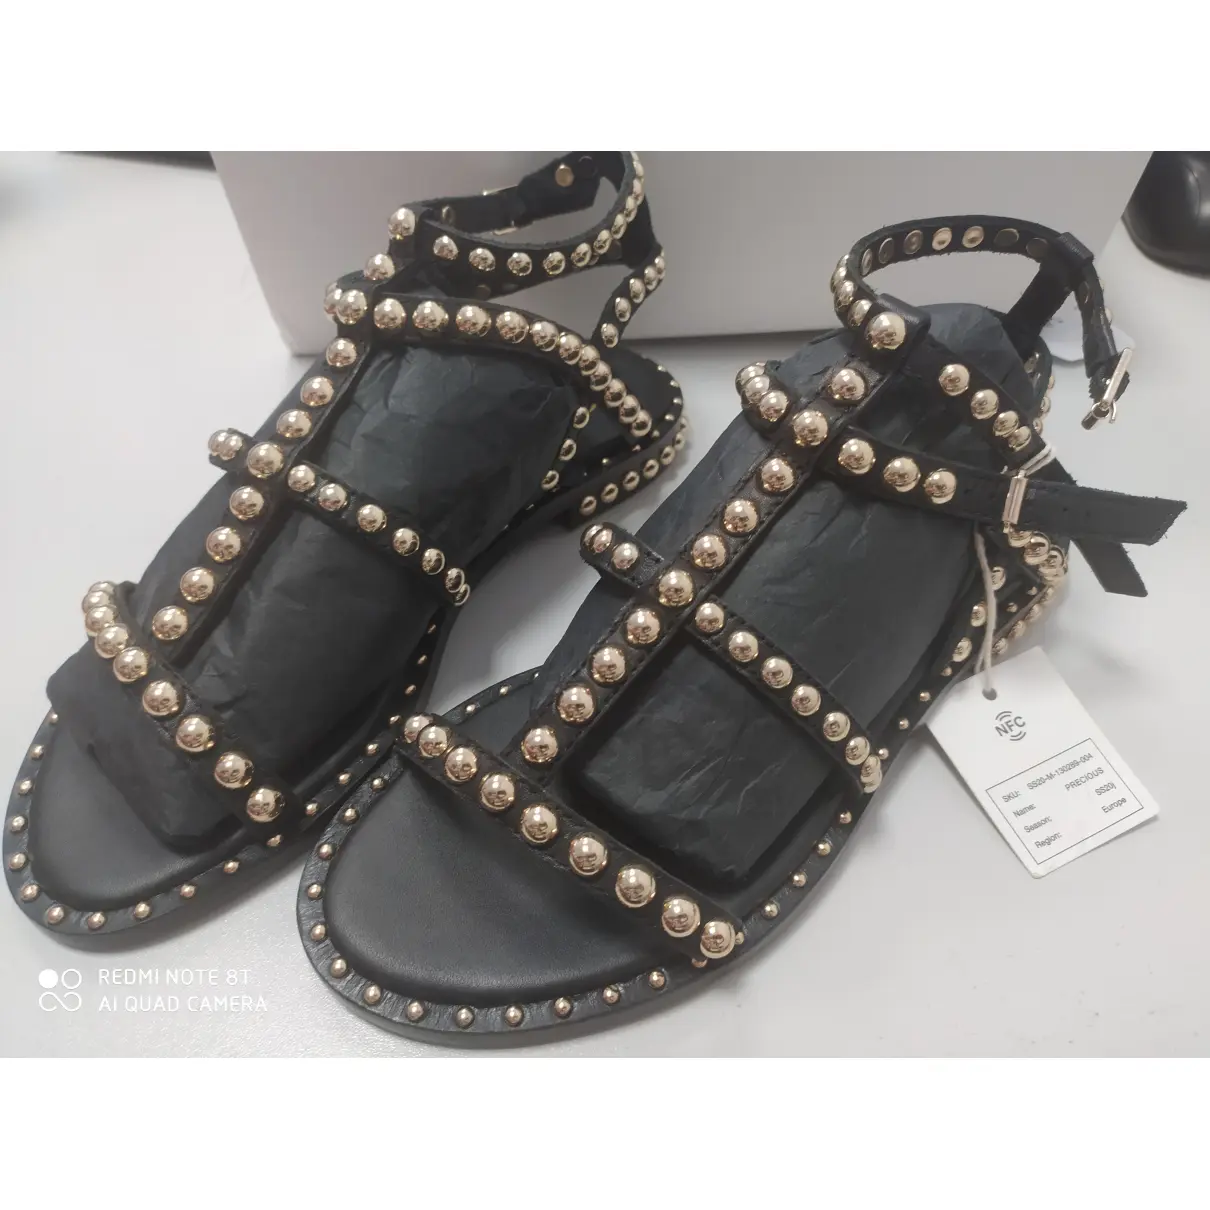 Buy Ash Leather sandals online